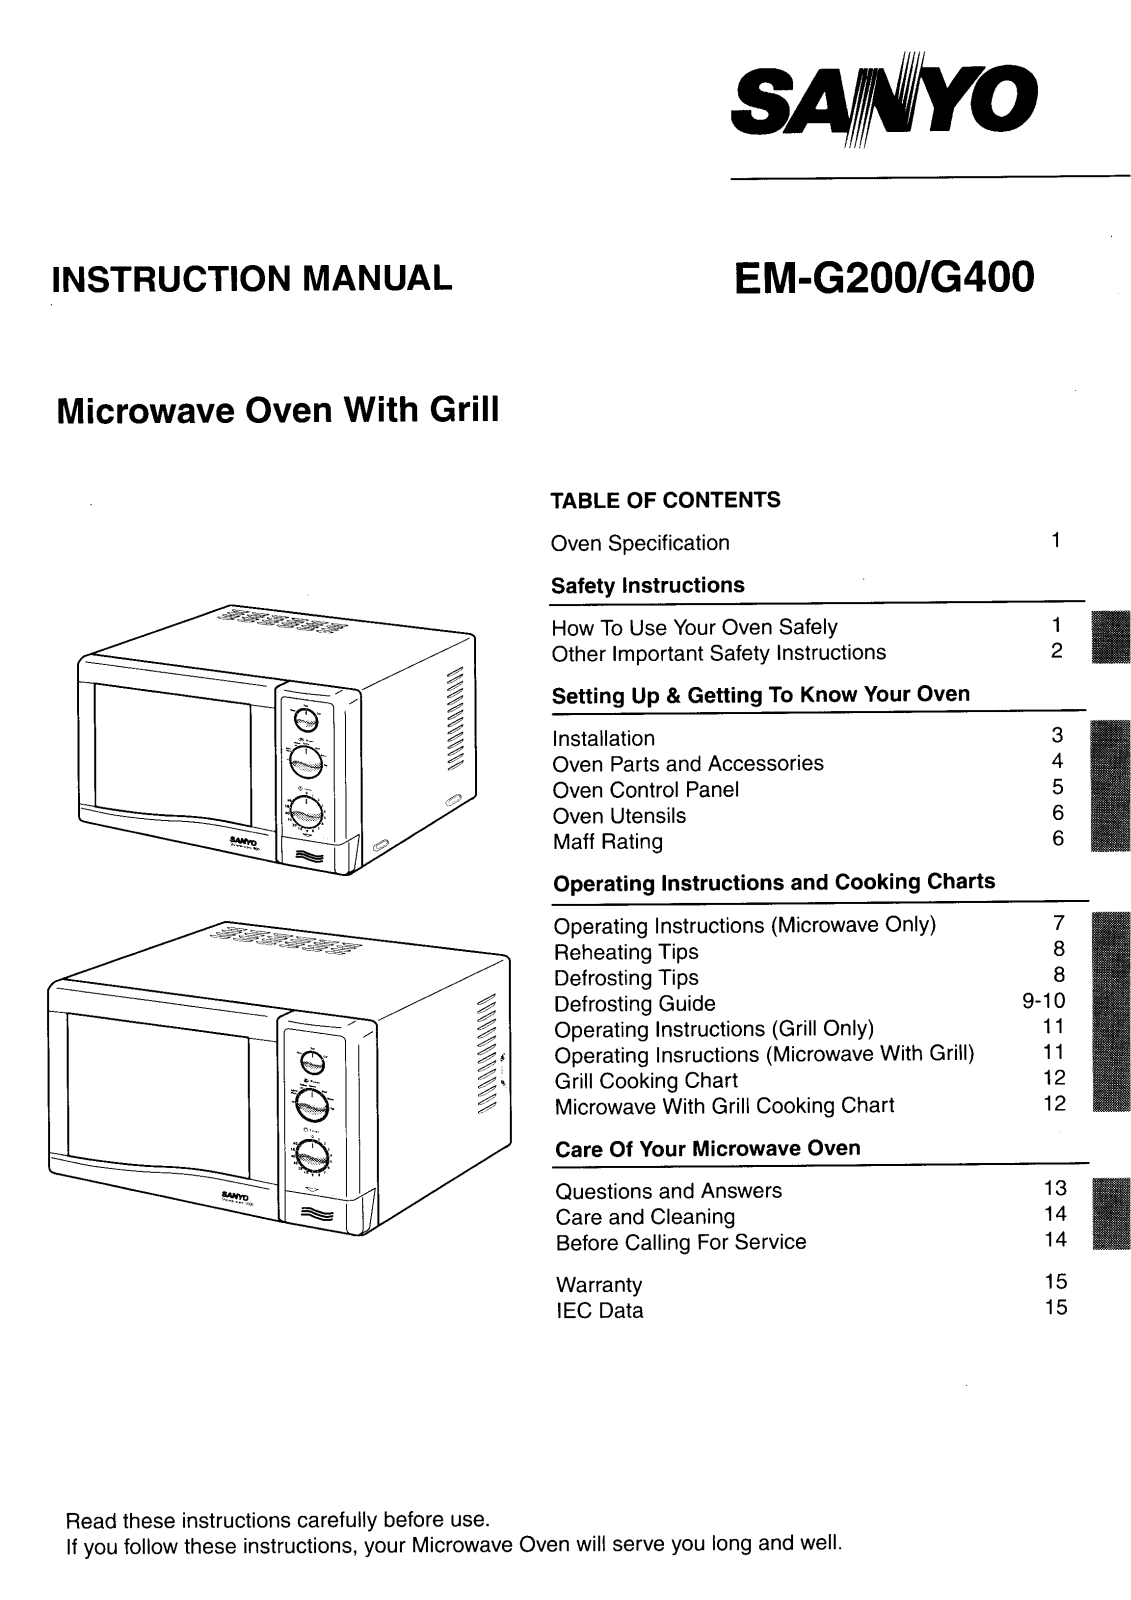 Sanyo EM-G400, EM-G200 Instruction Manual